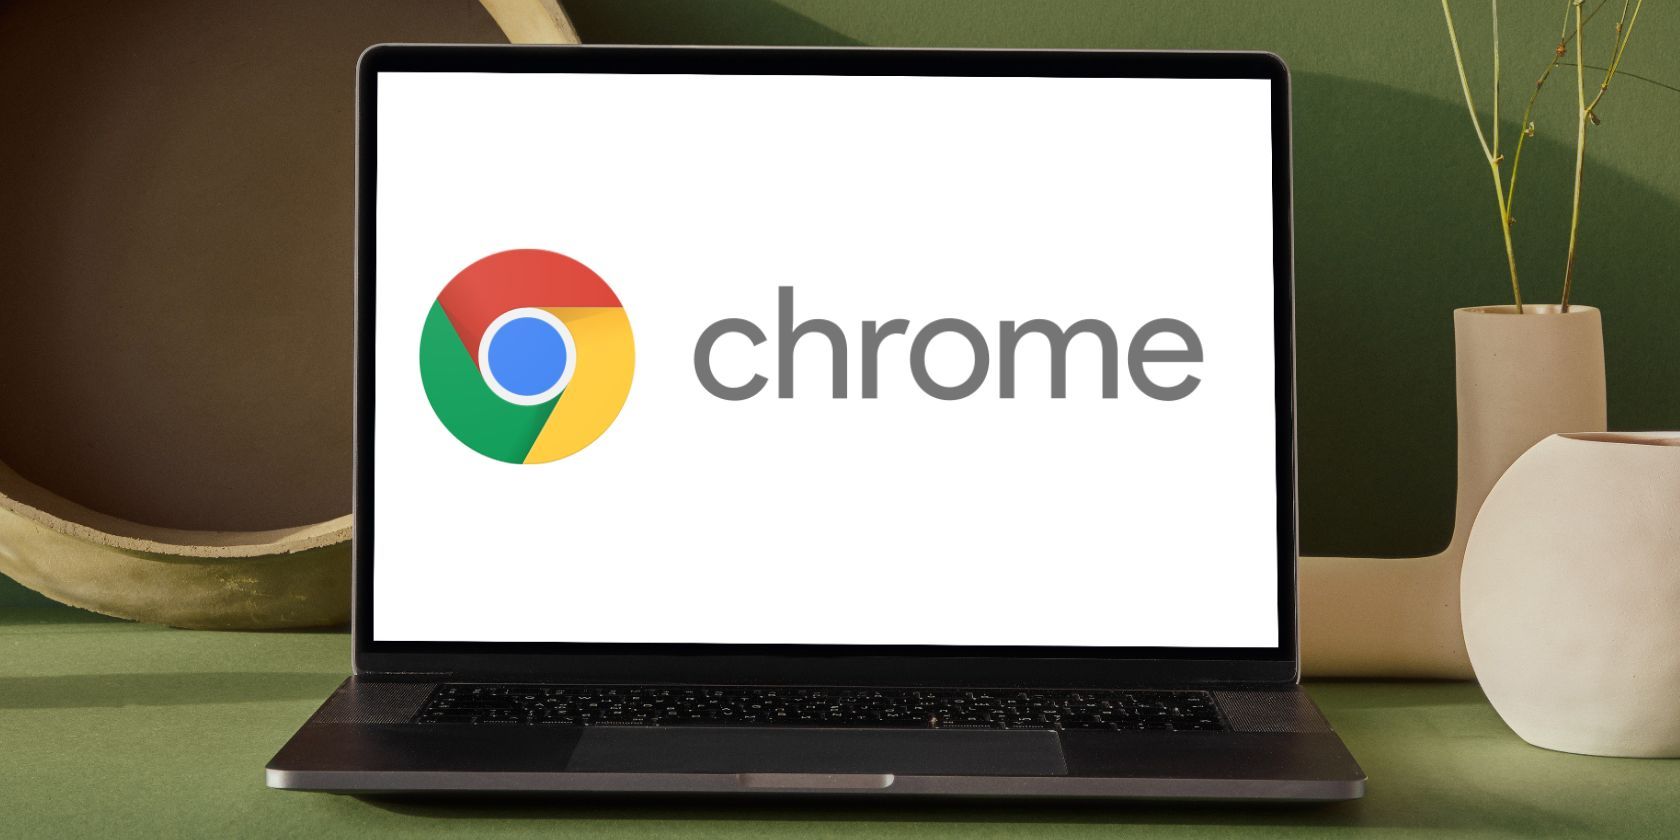 chrome logo on white laptop screen placed on desk